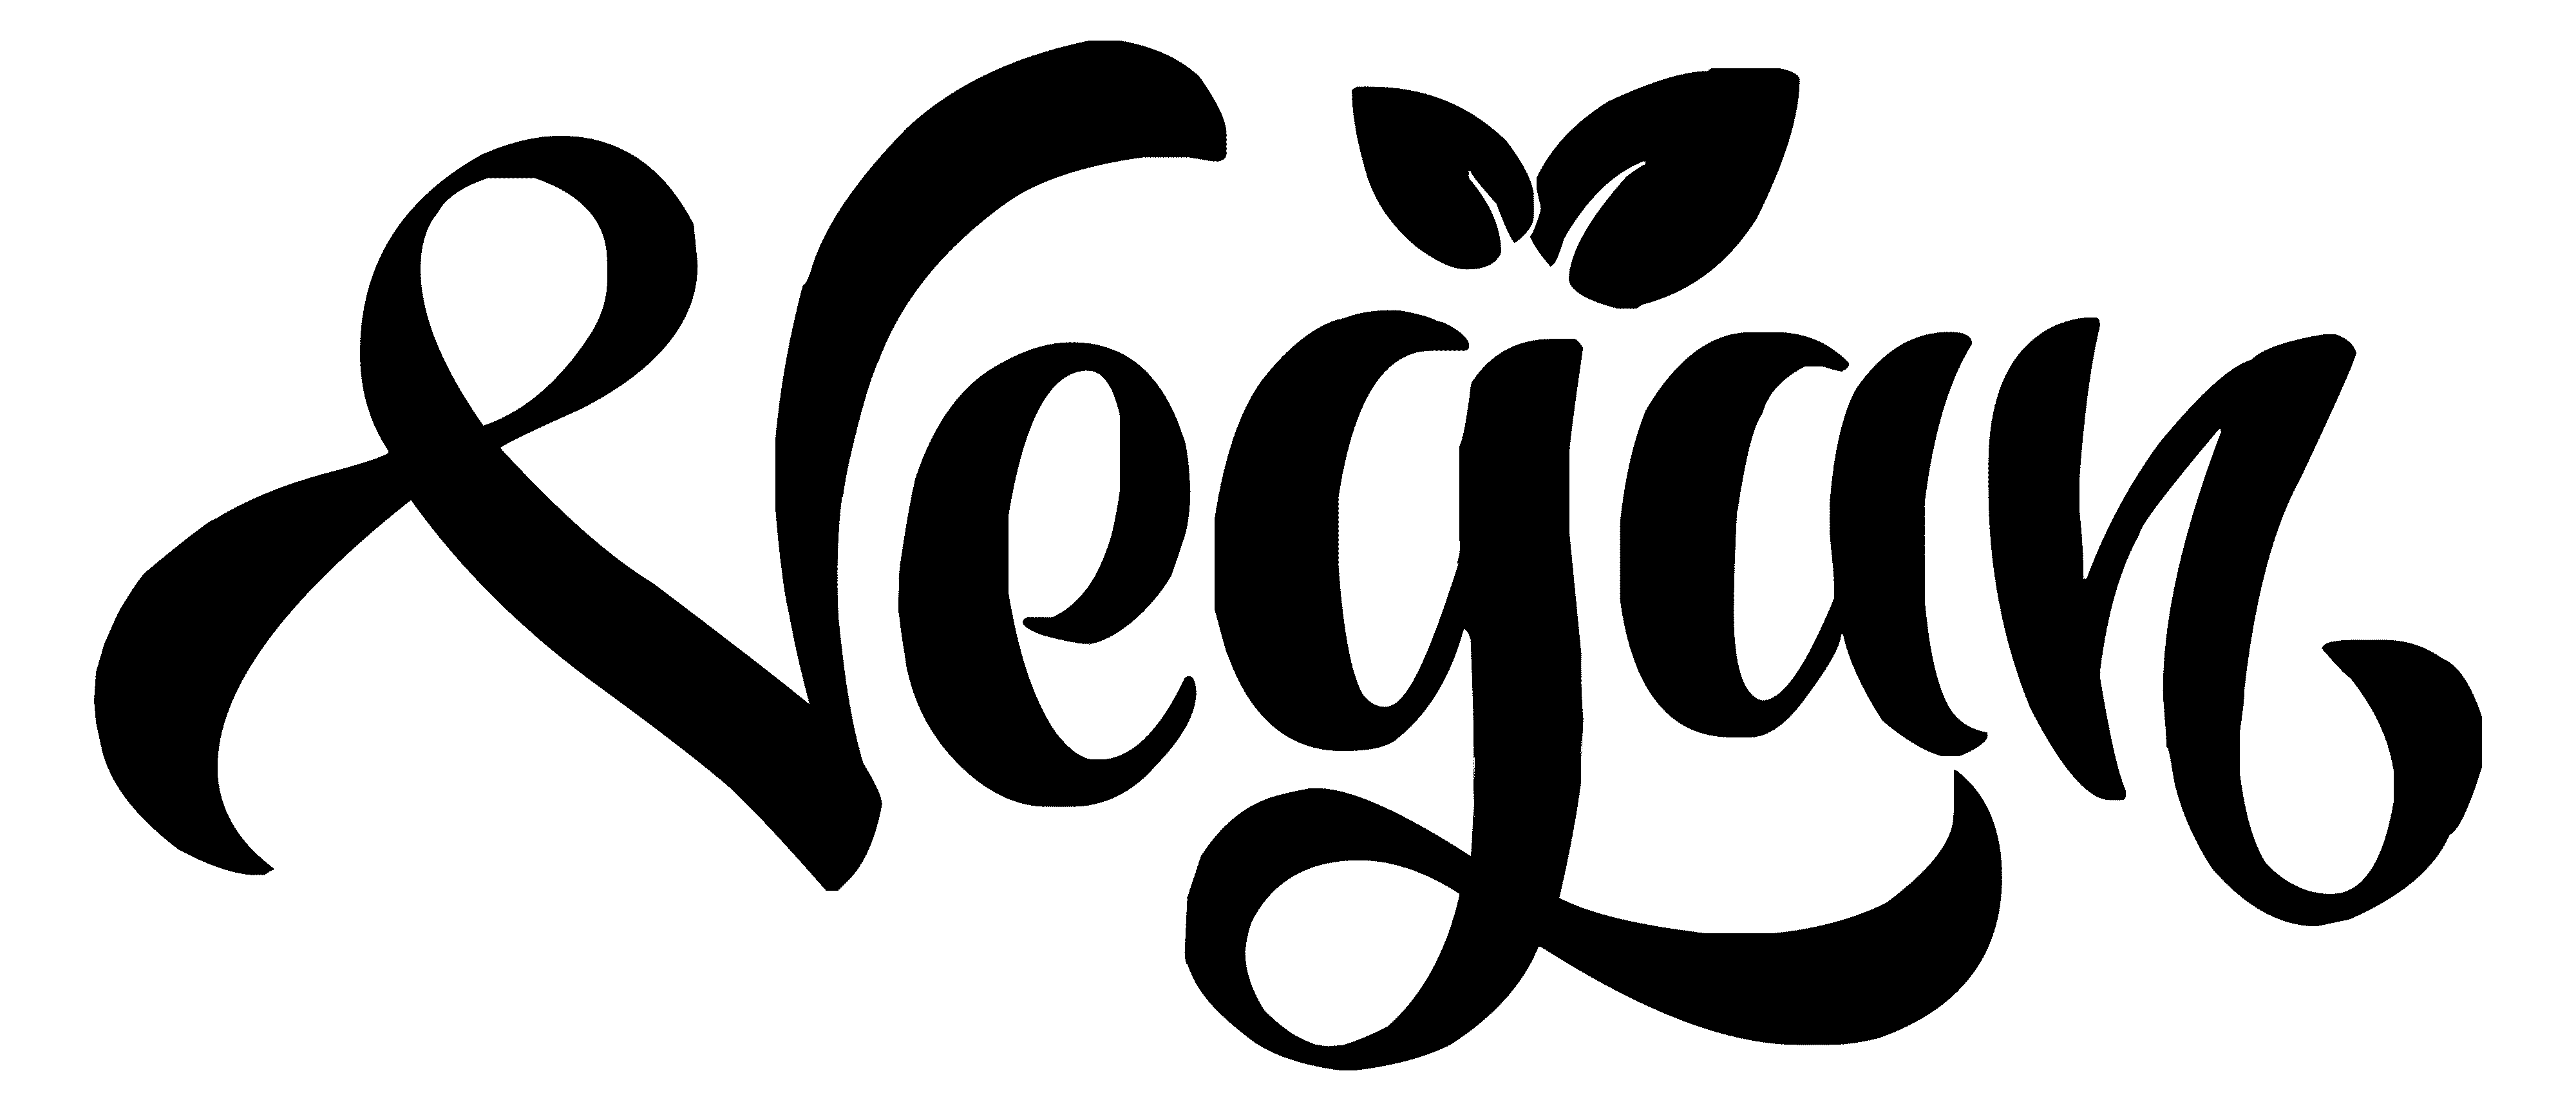 Vegan Company Logo - 30 Company Logos Clipart vegan Free Clip Art stock illustrations ...